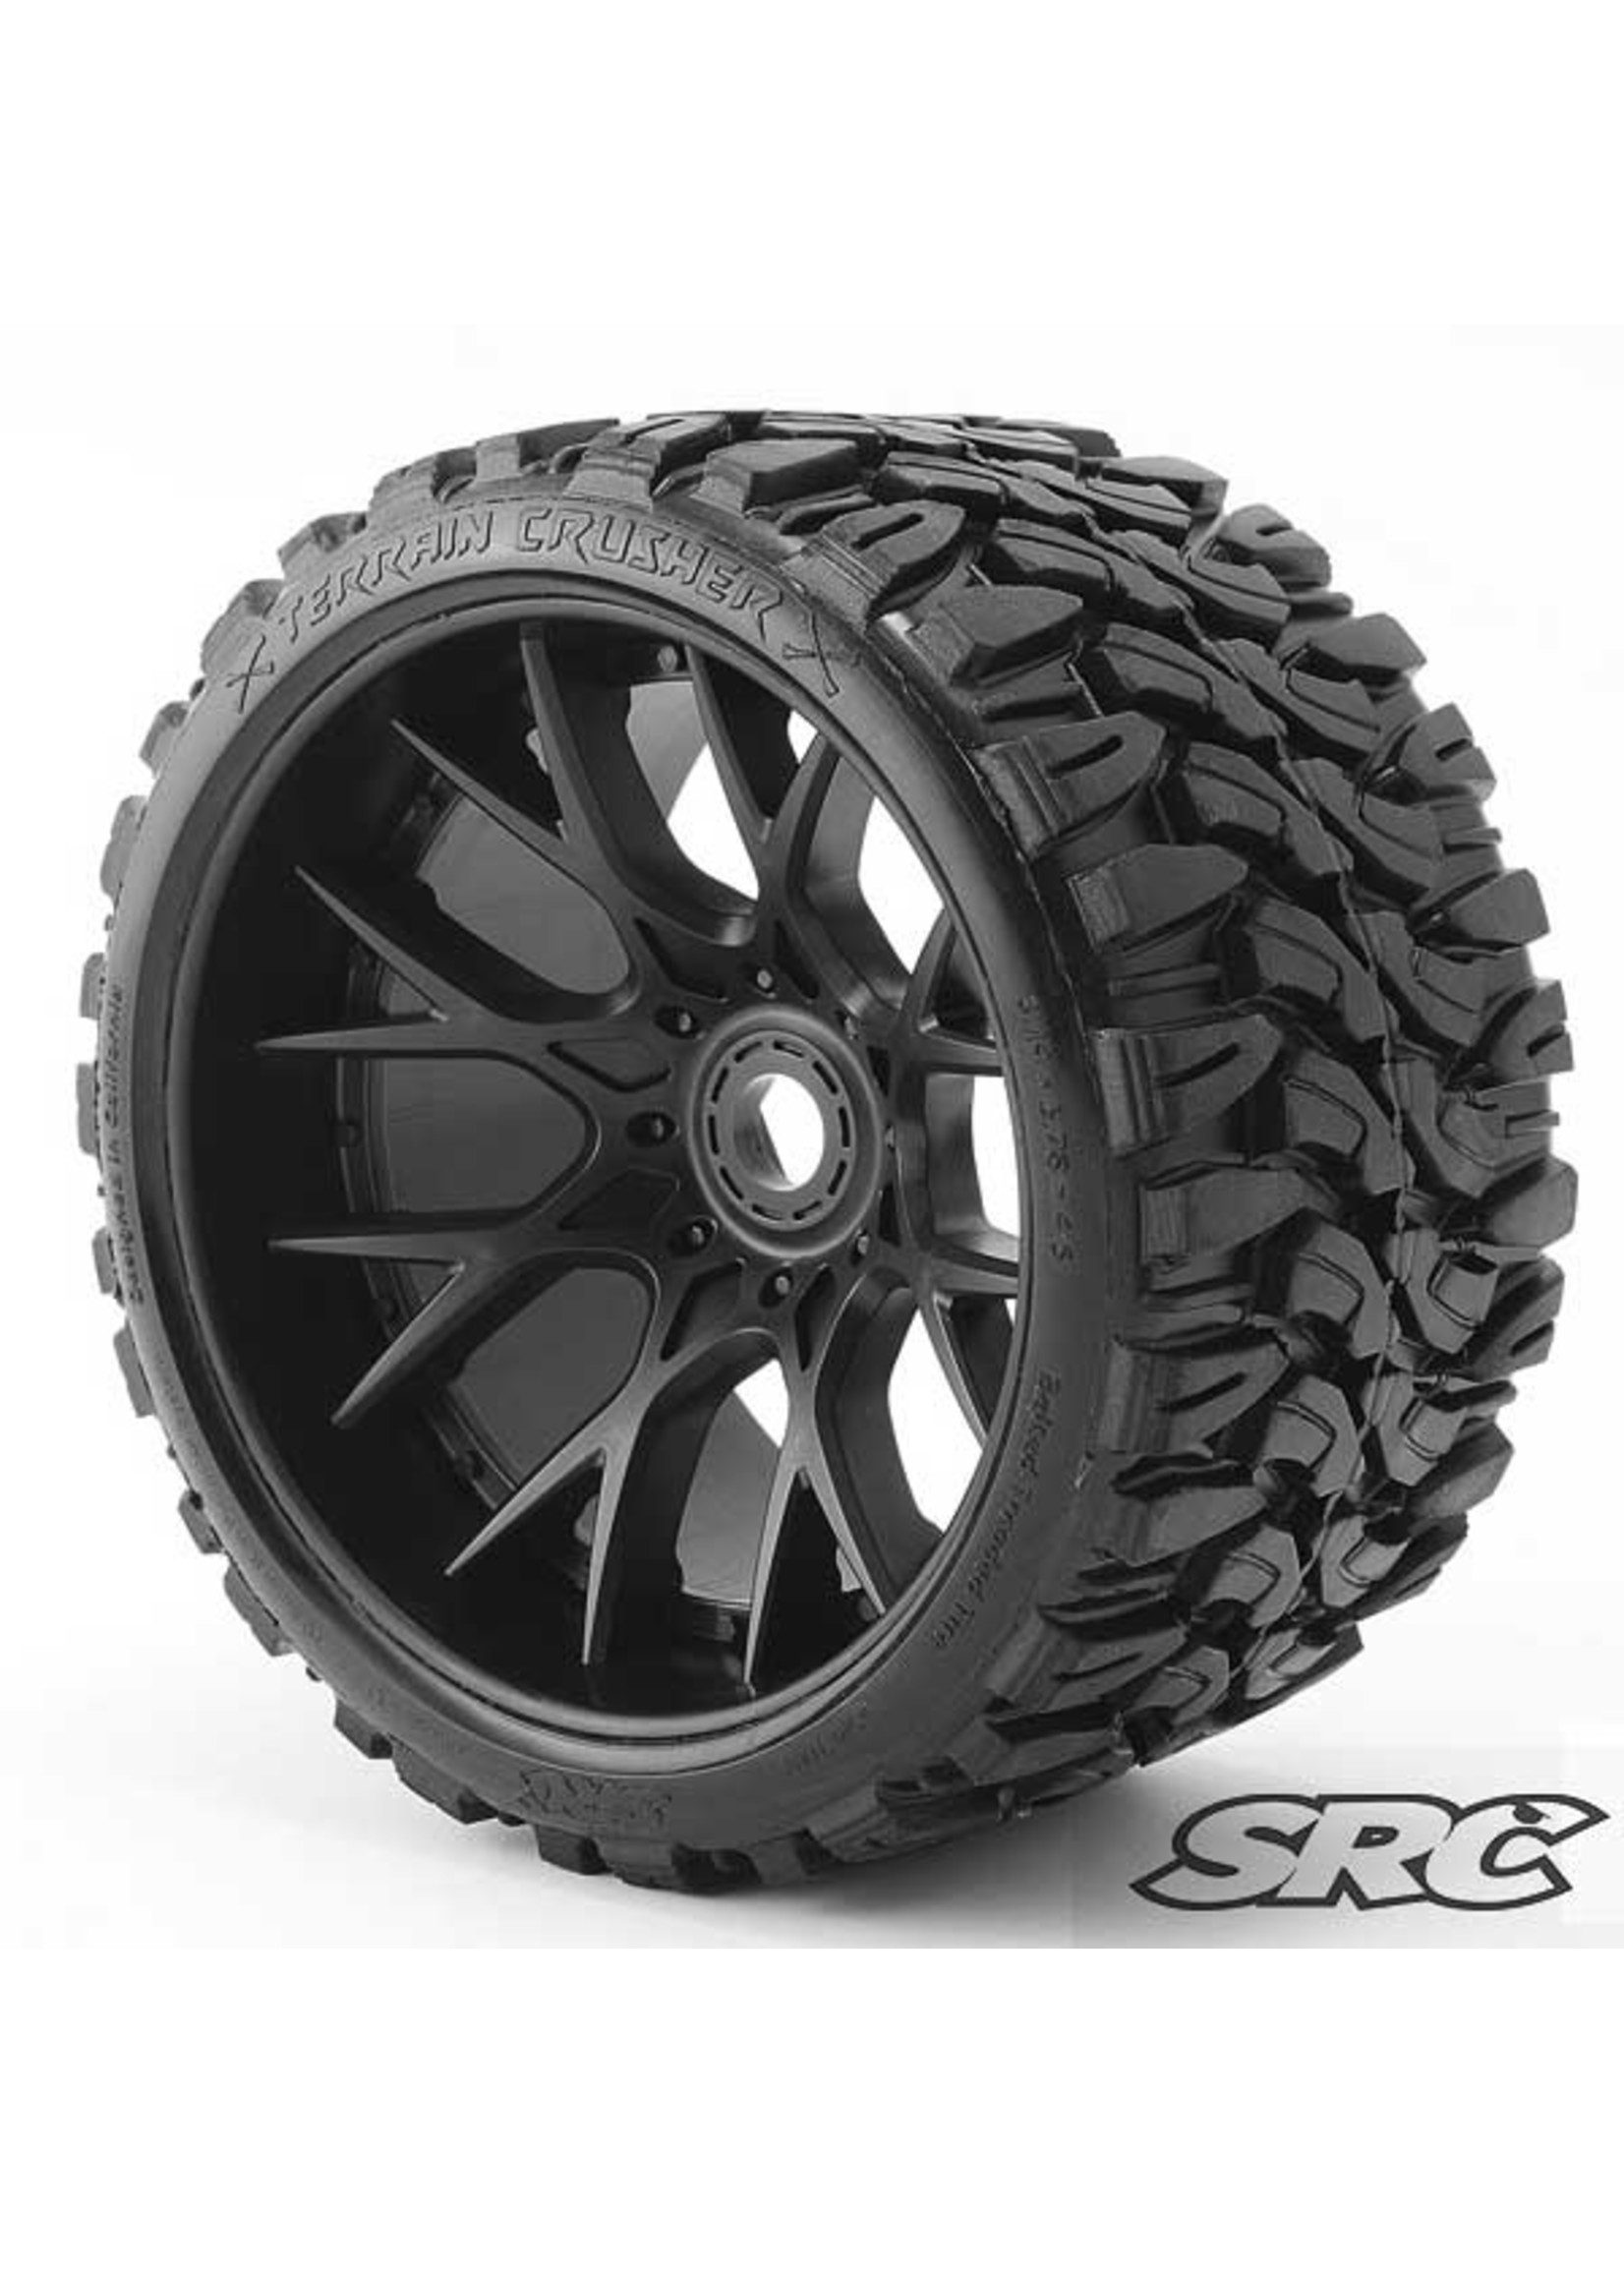 SWEEP C1002B - MT Terrian Crusher Tire Black (rop)